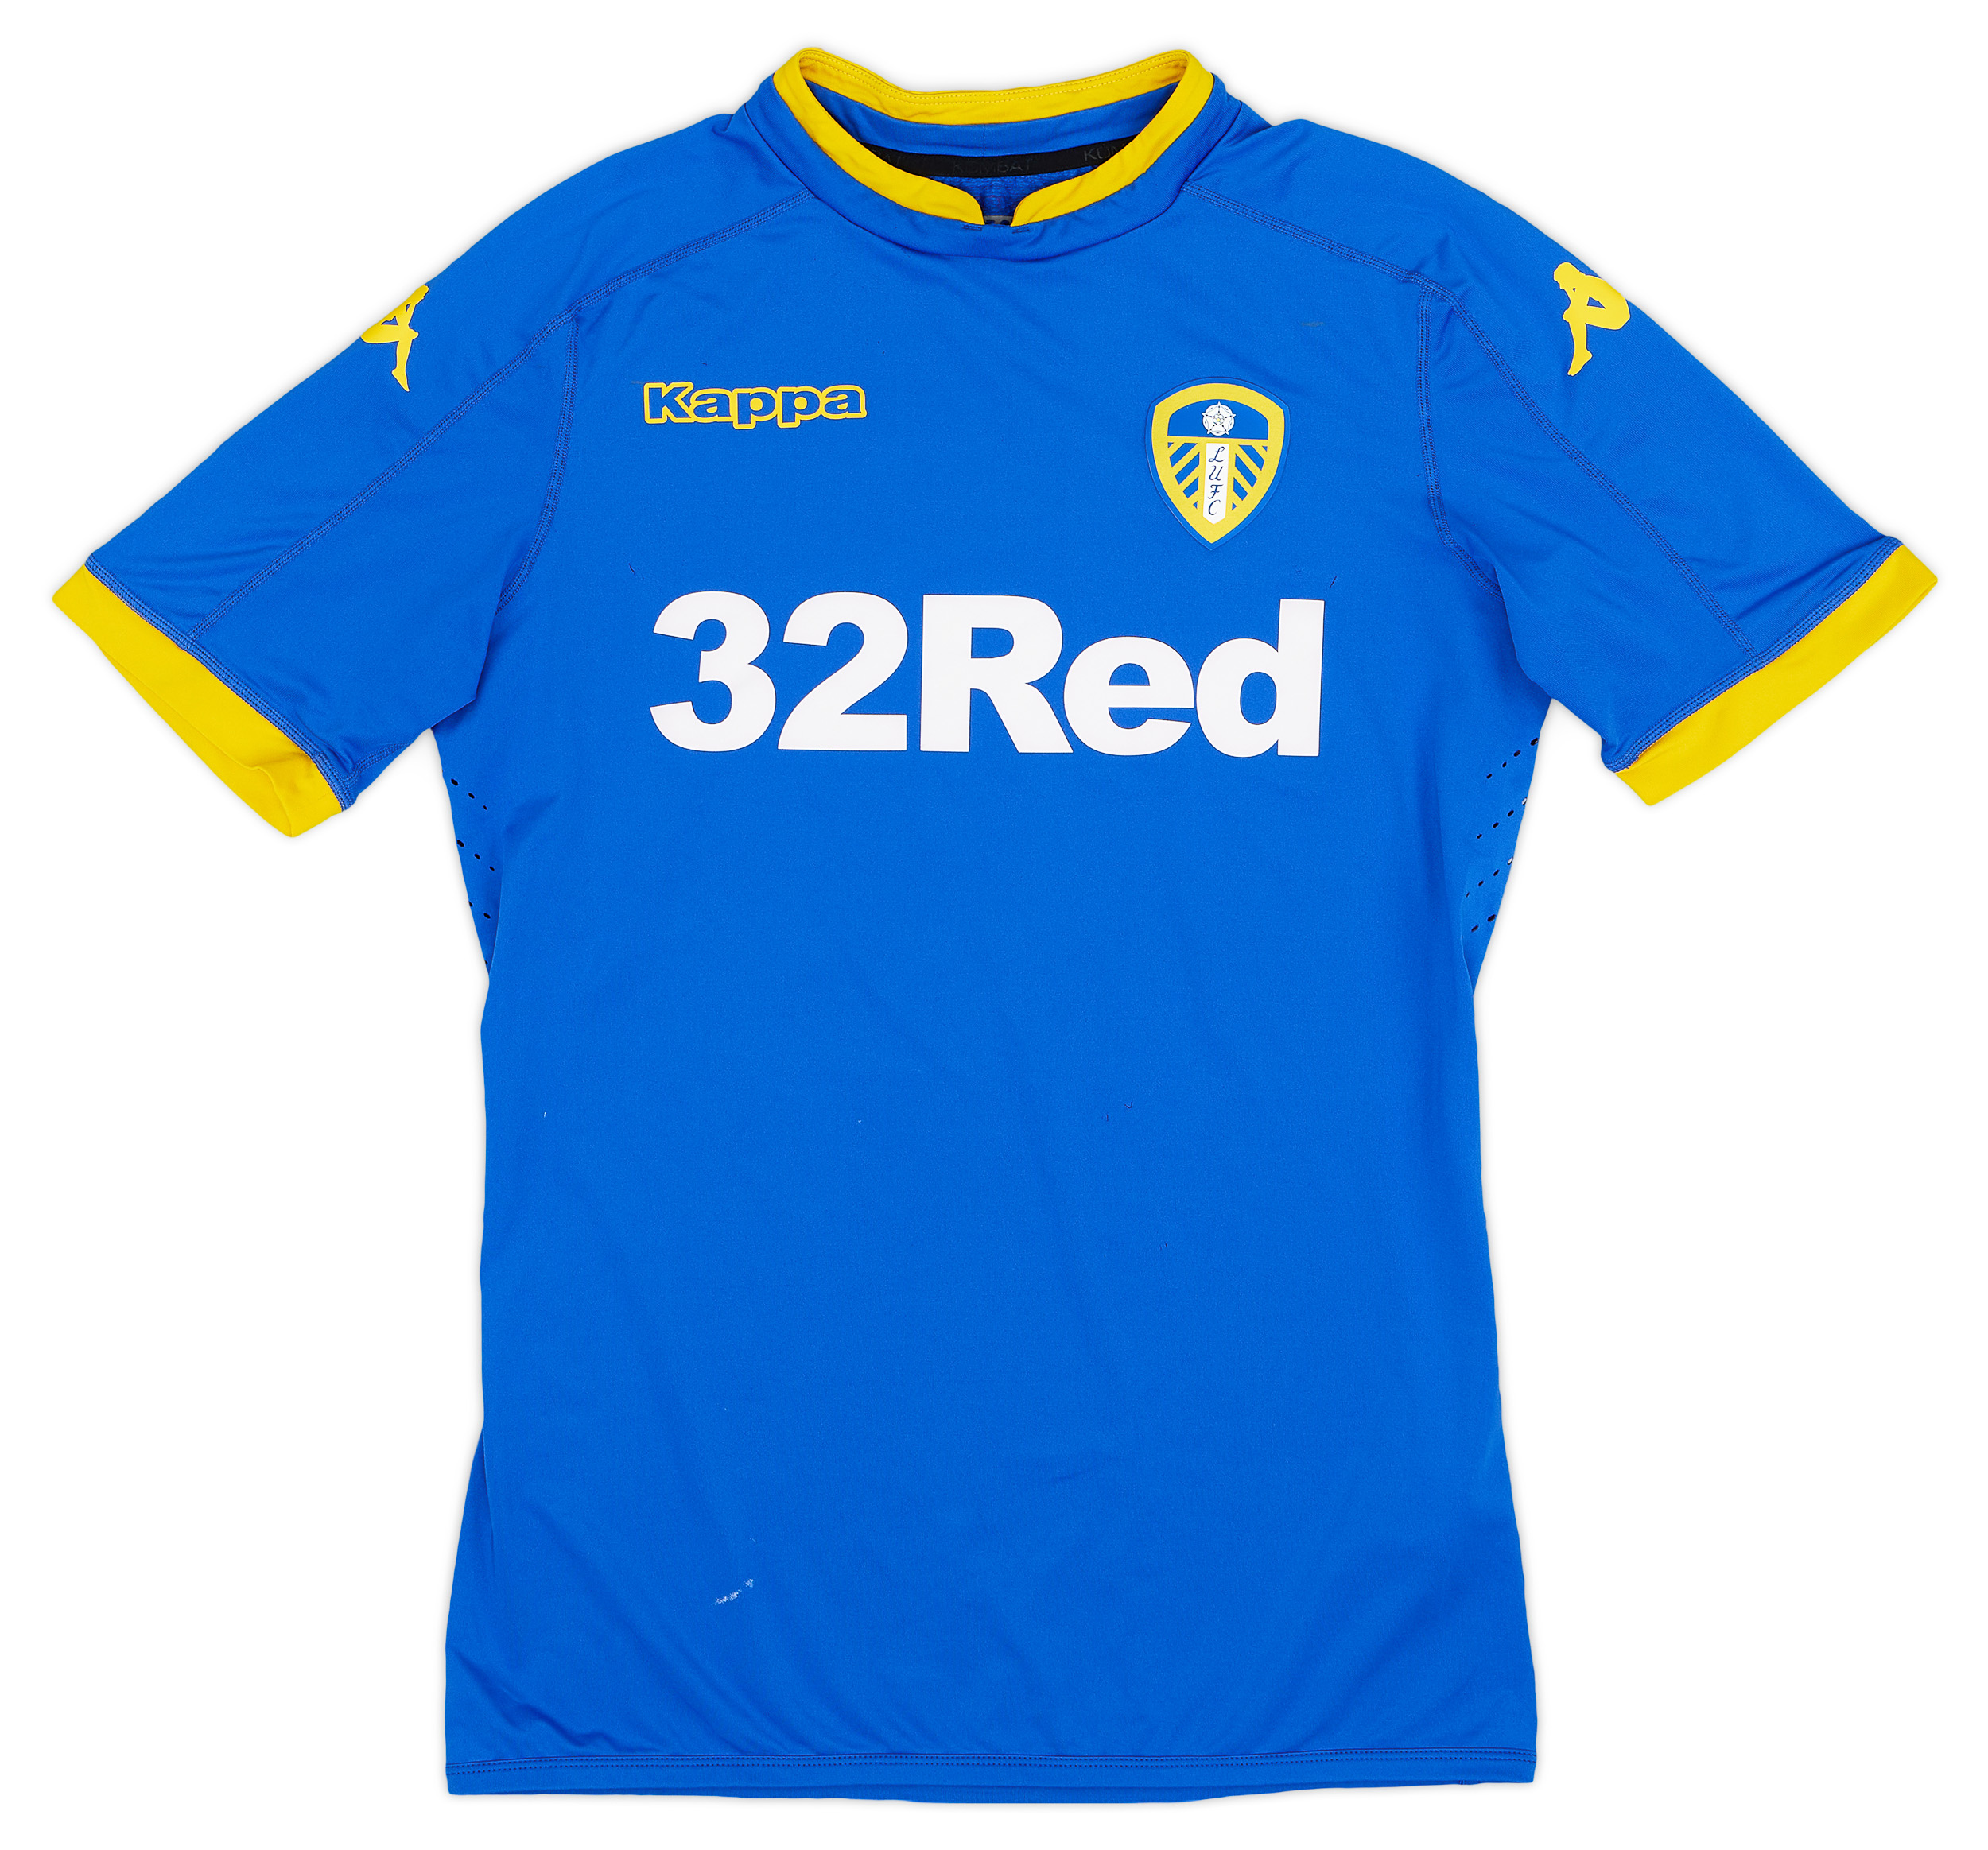 2016-17 Leeds United Away Shirt - 8/10 - ()